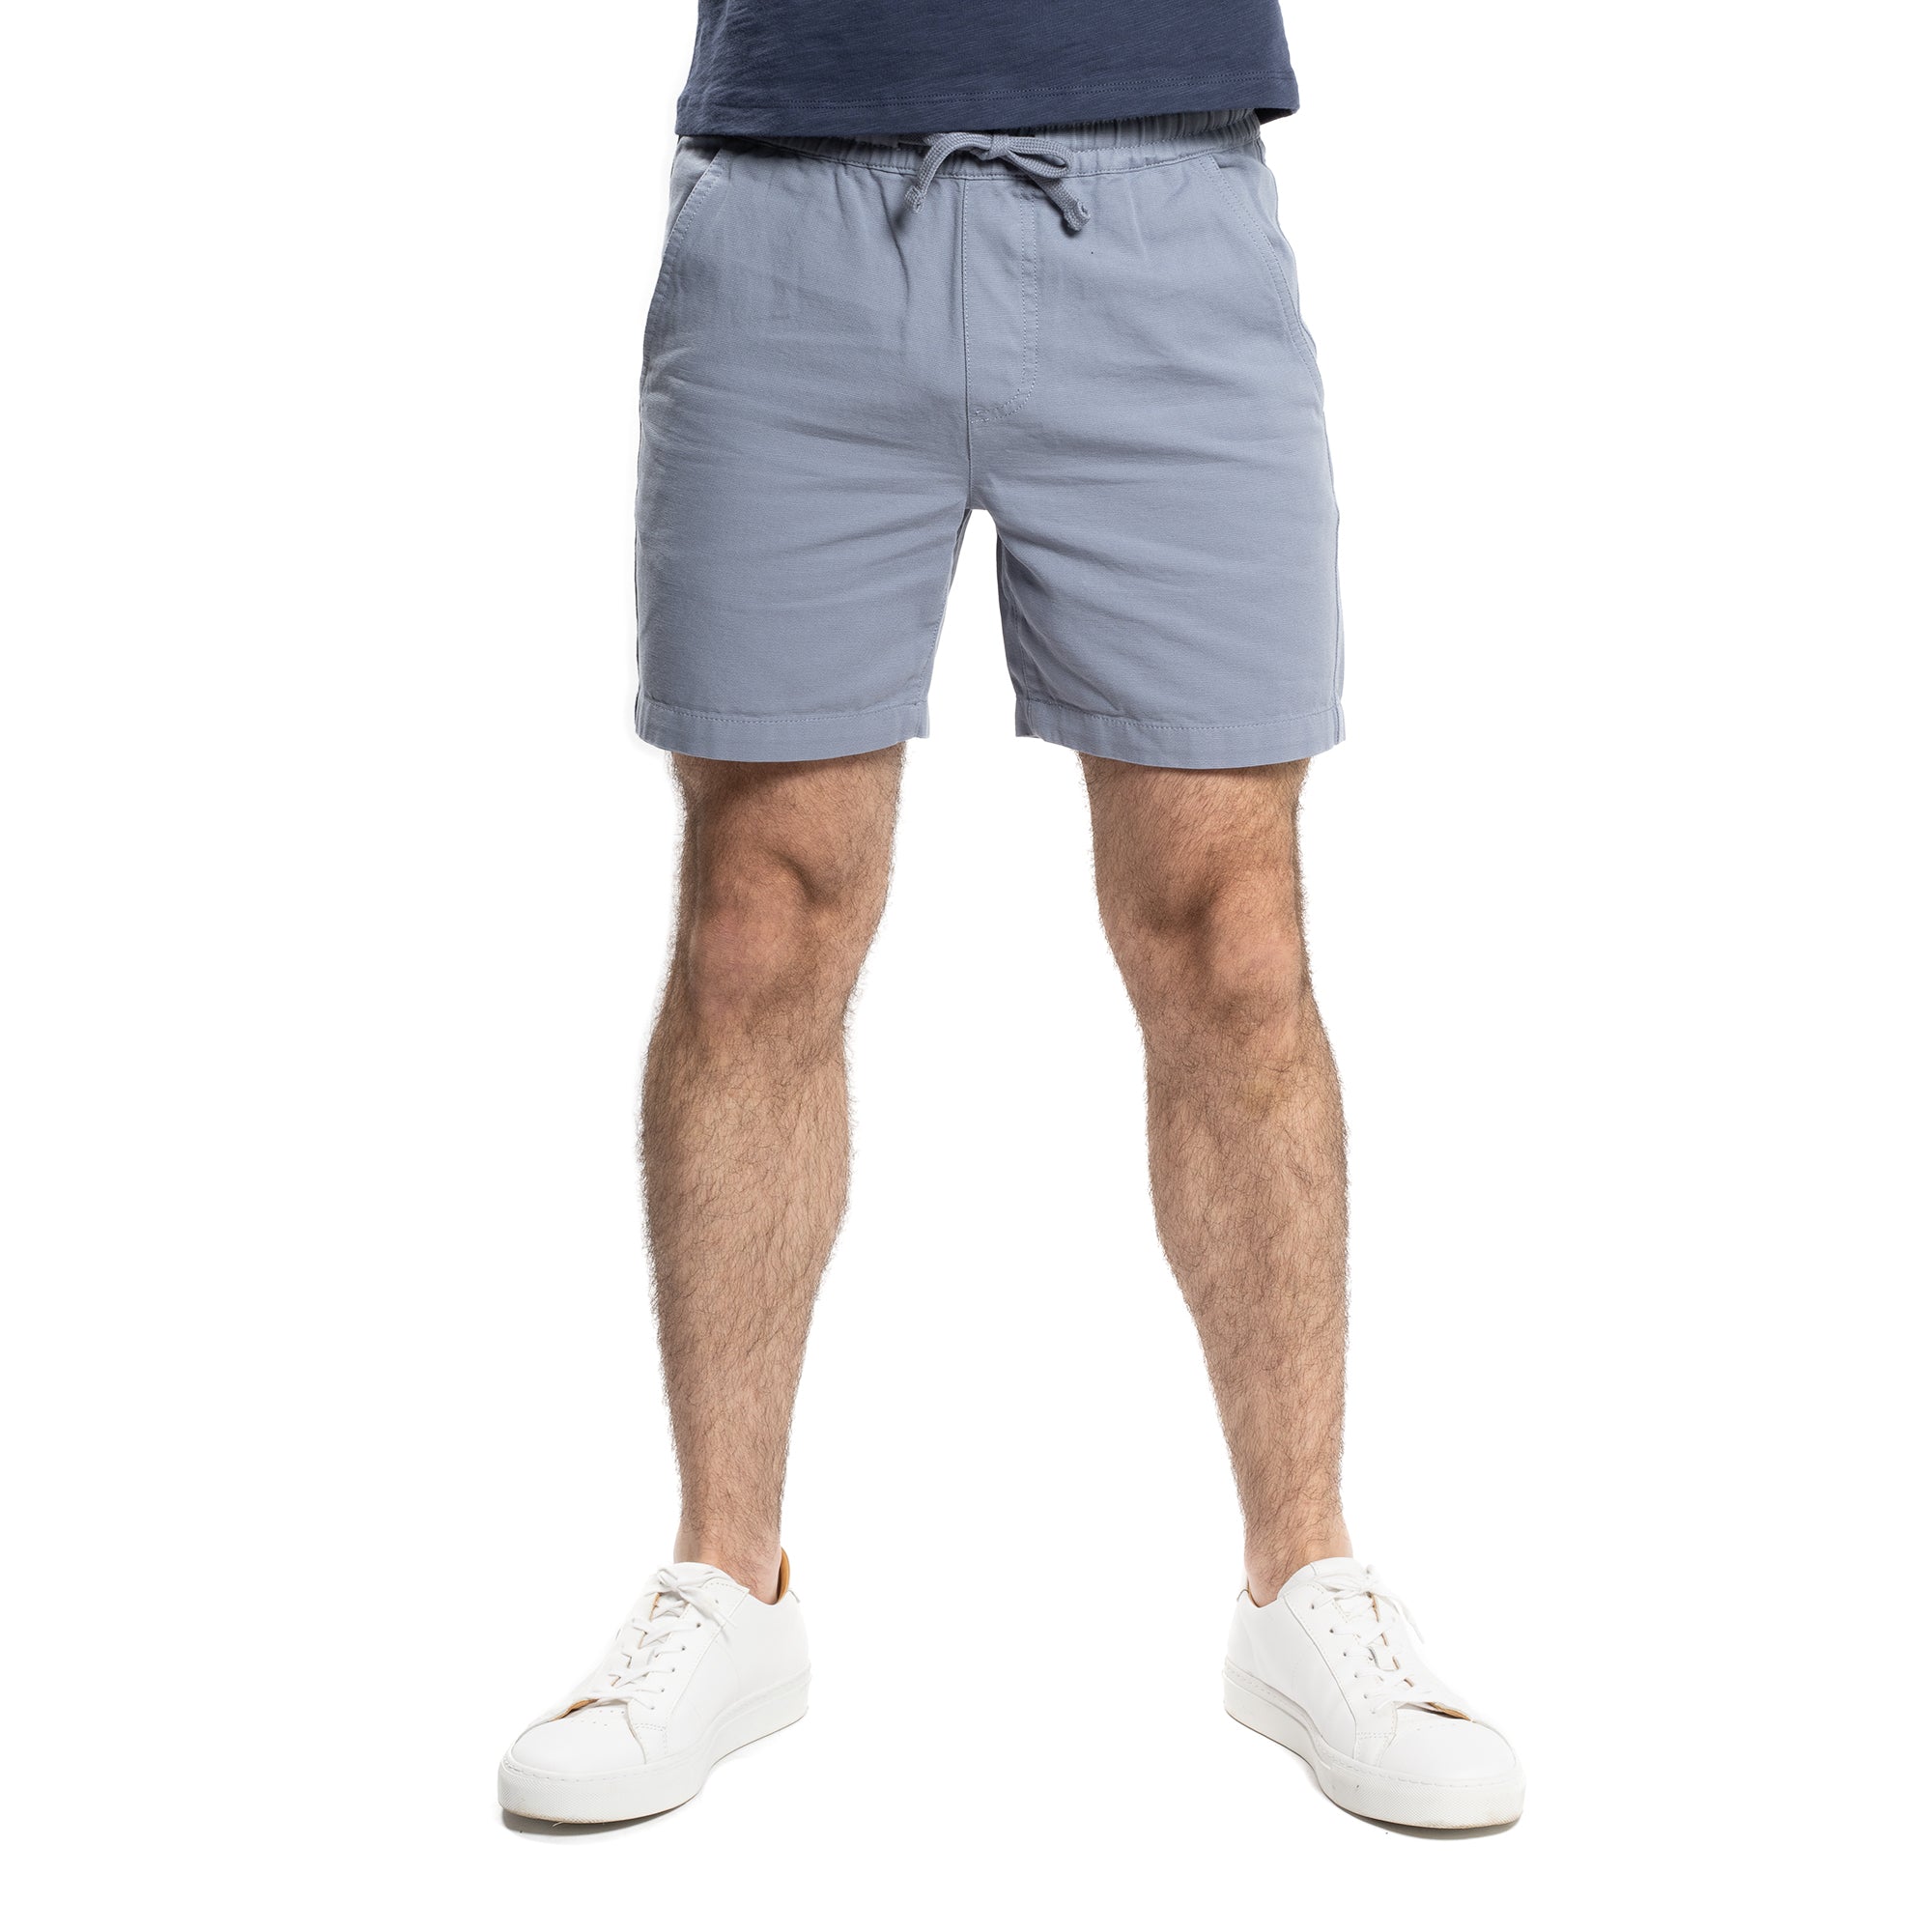 Dock Shorts - Slate